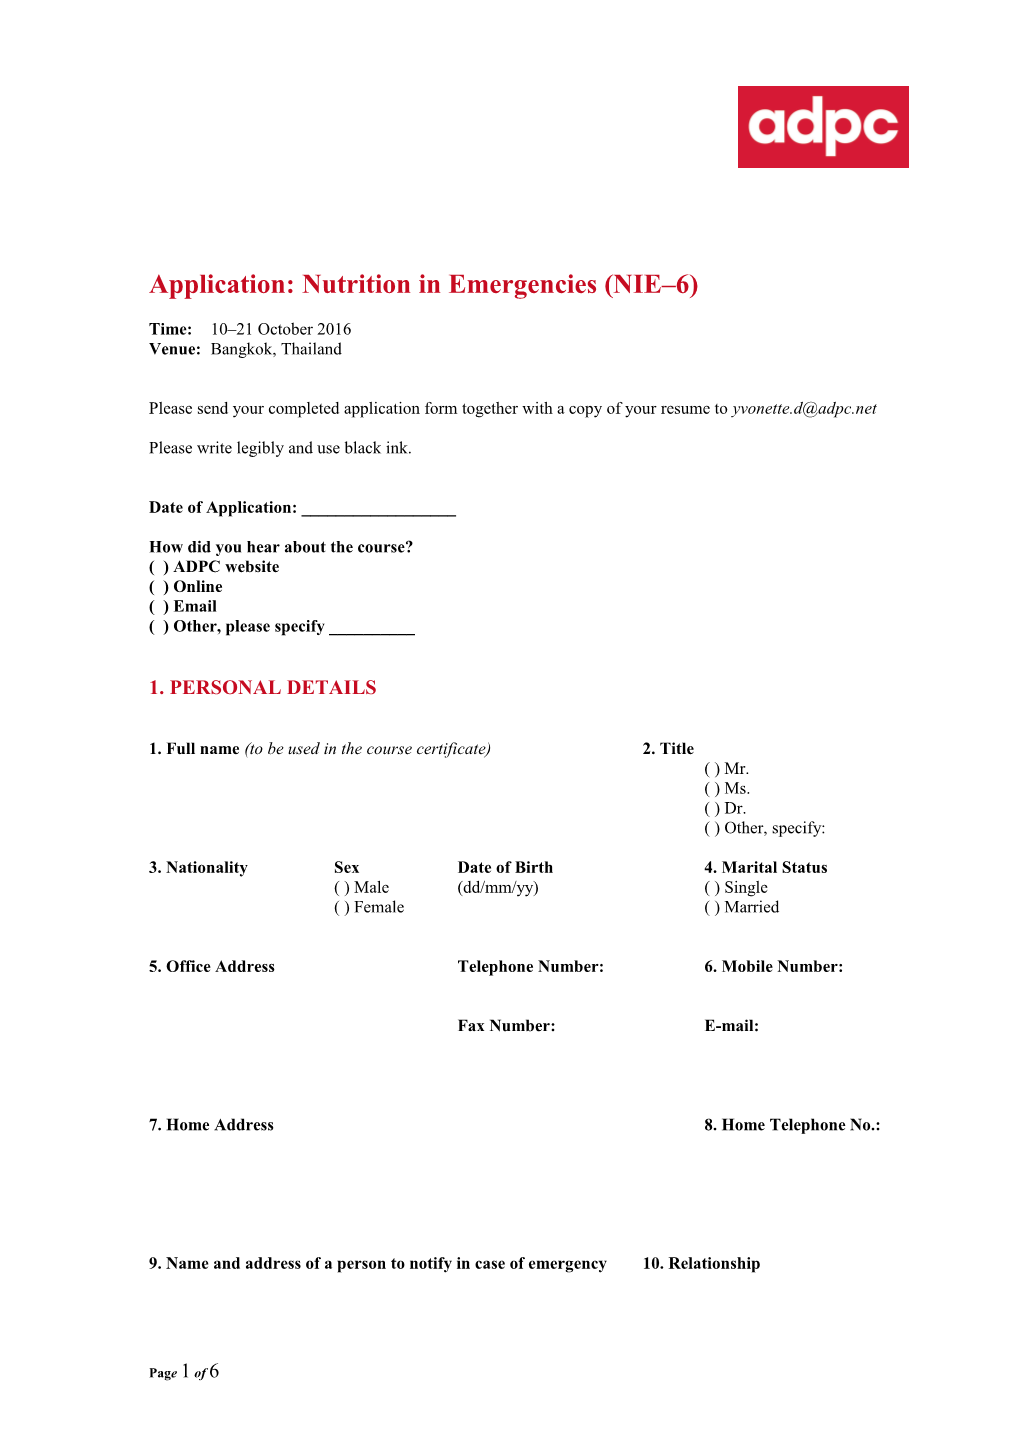 Application: Nutrition in Emergencies (NIE 6)